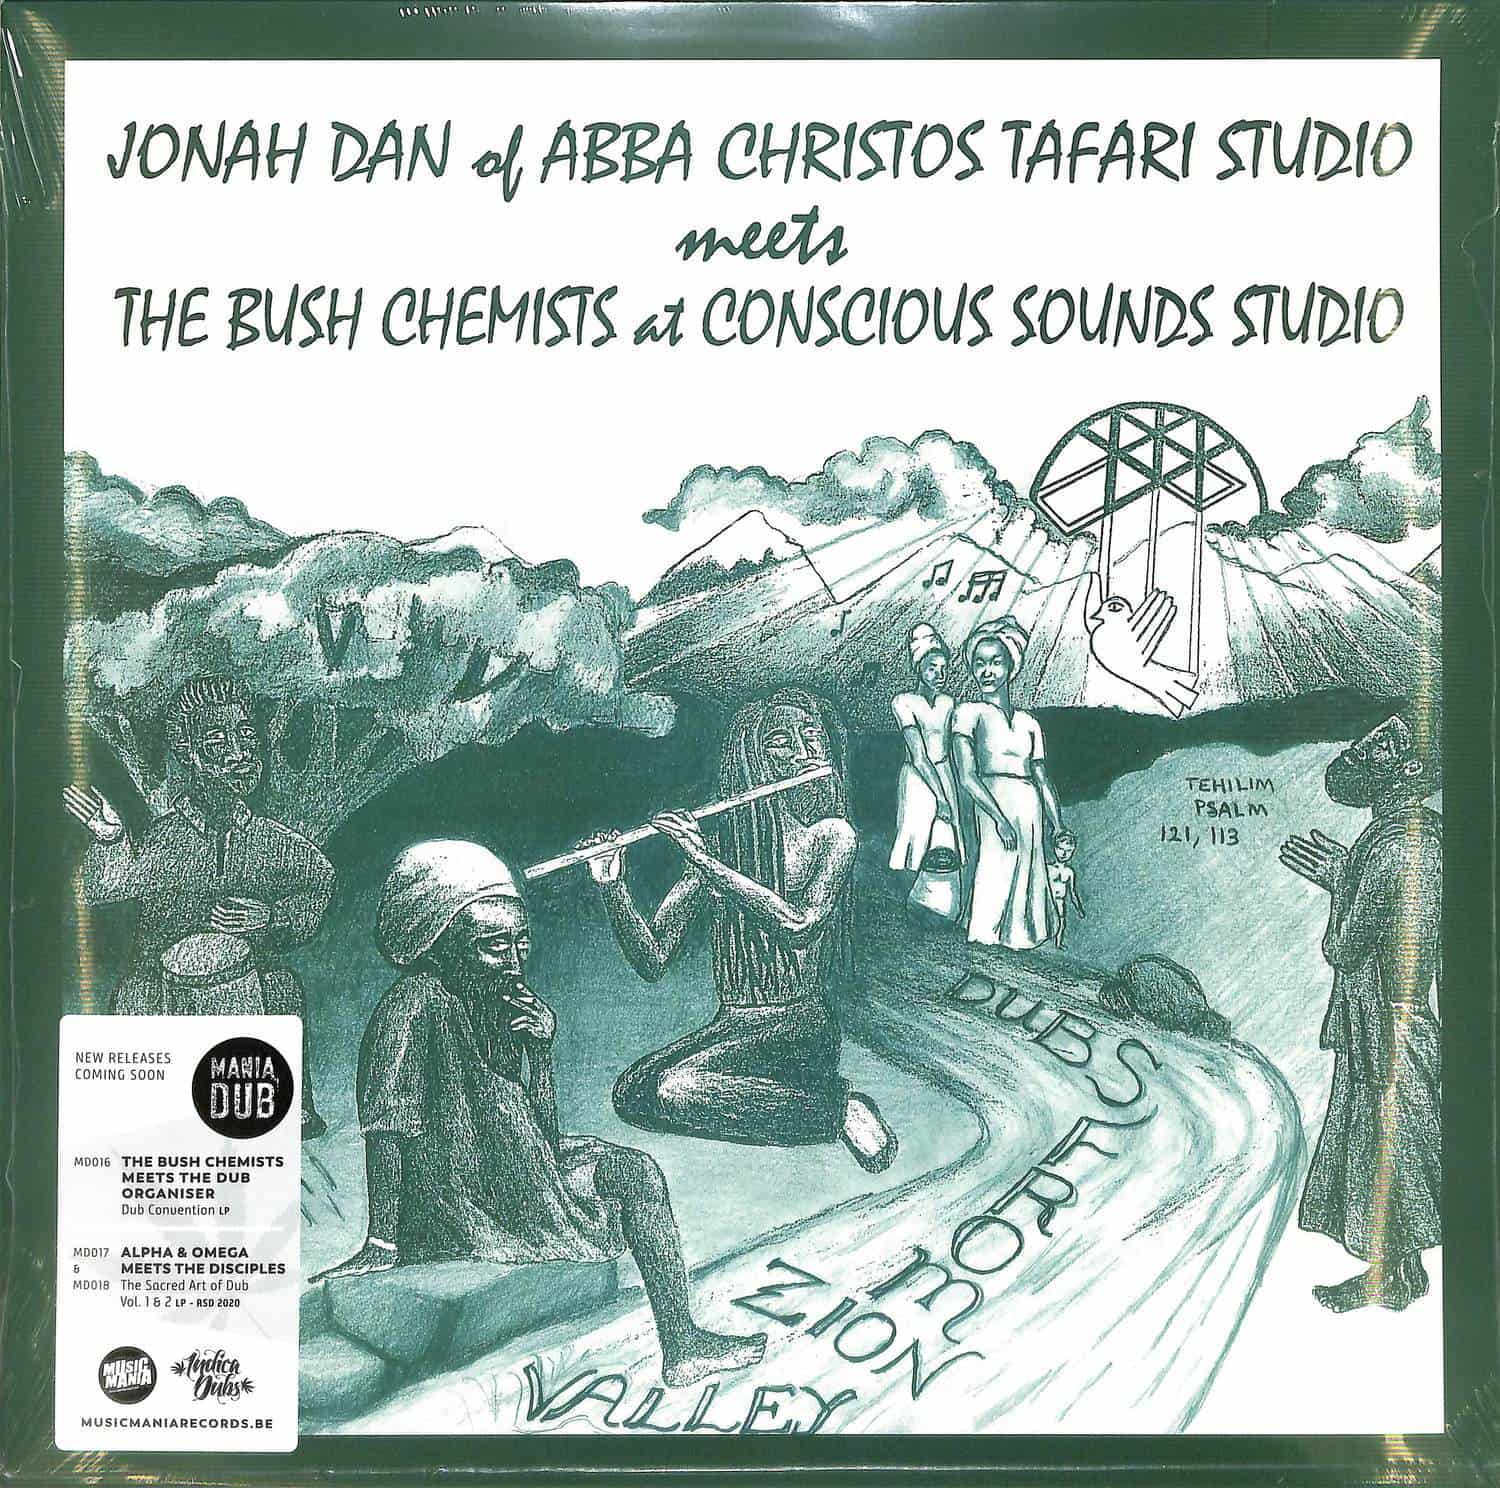 Jonah Dan Meets The Bush Chemists - DUBS FROM ZION VALLEY LP